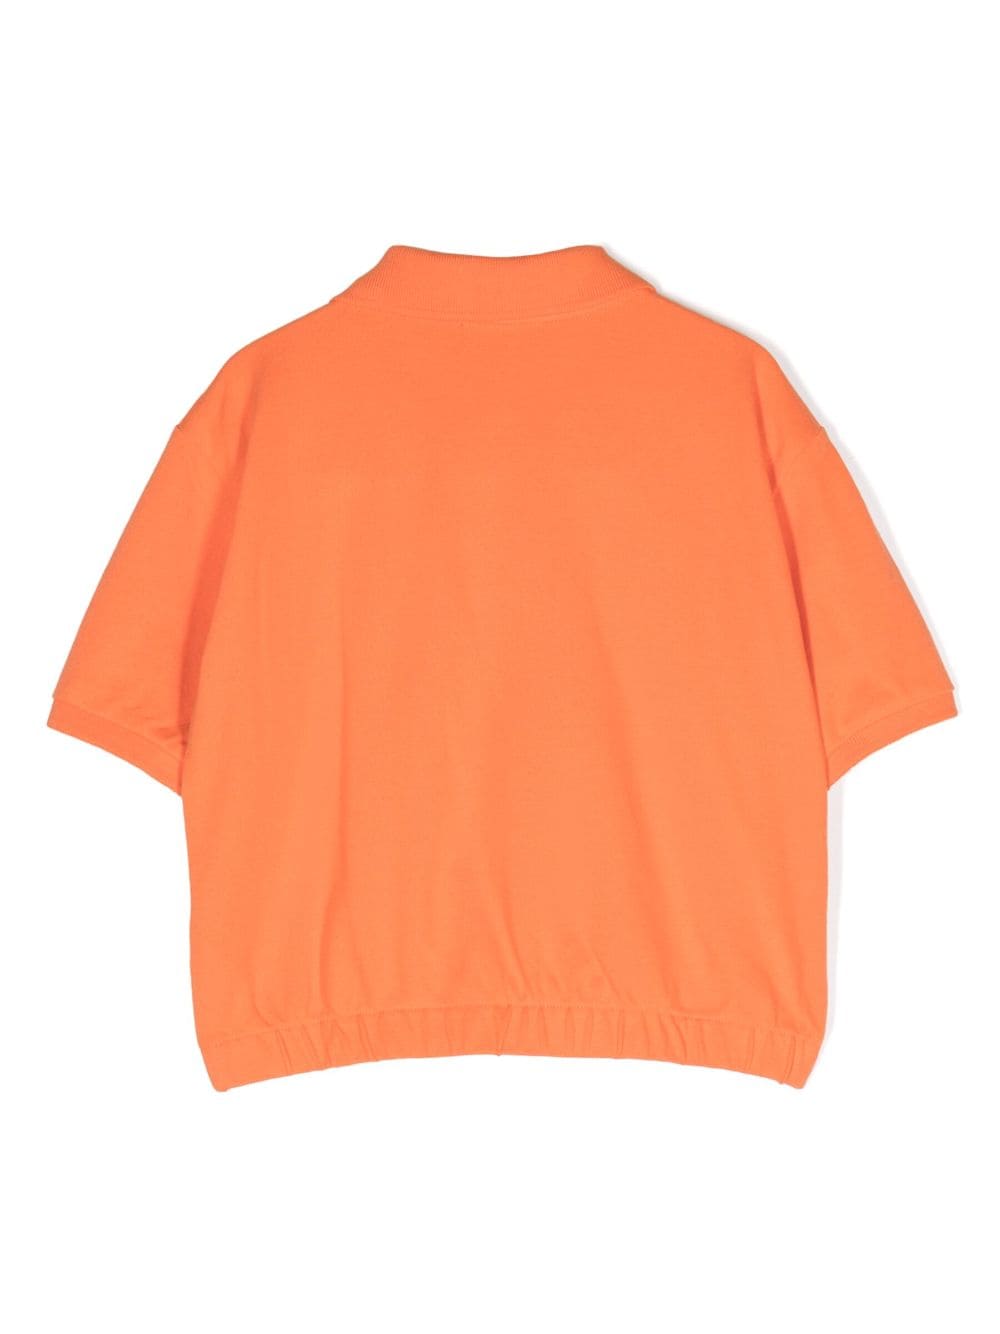 Polo fille orange avec logo